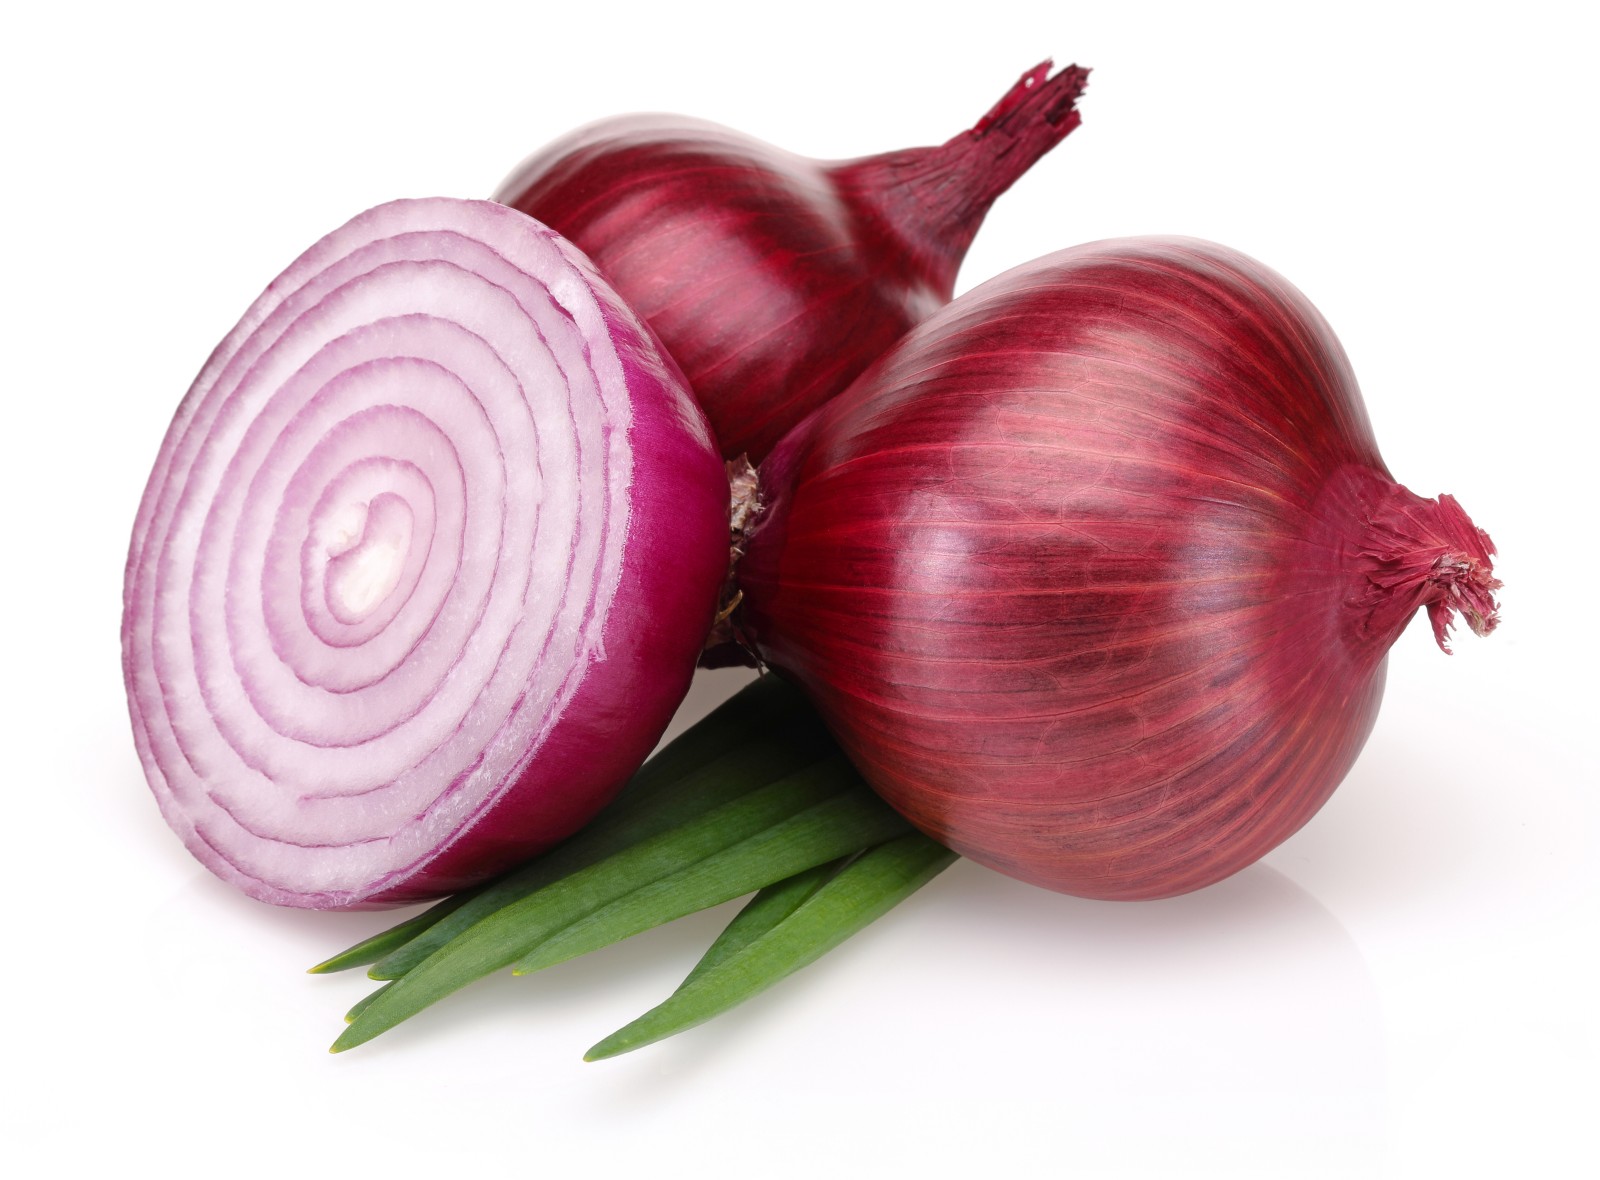 Onions-Health-Risk-And-Health-Benefits.jpg